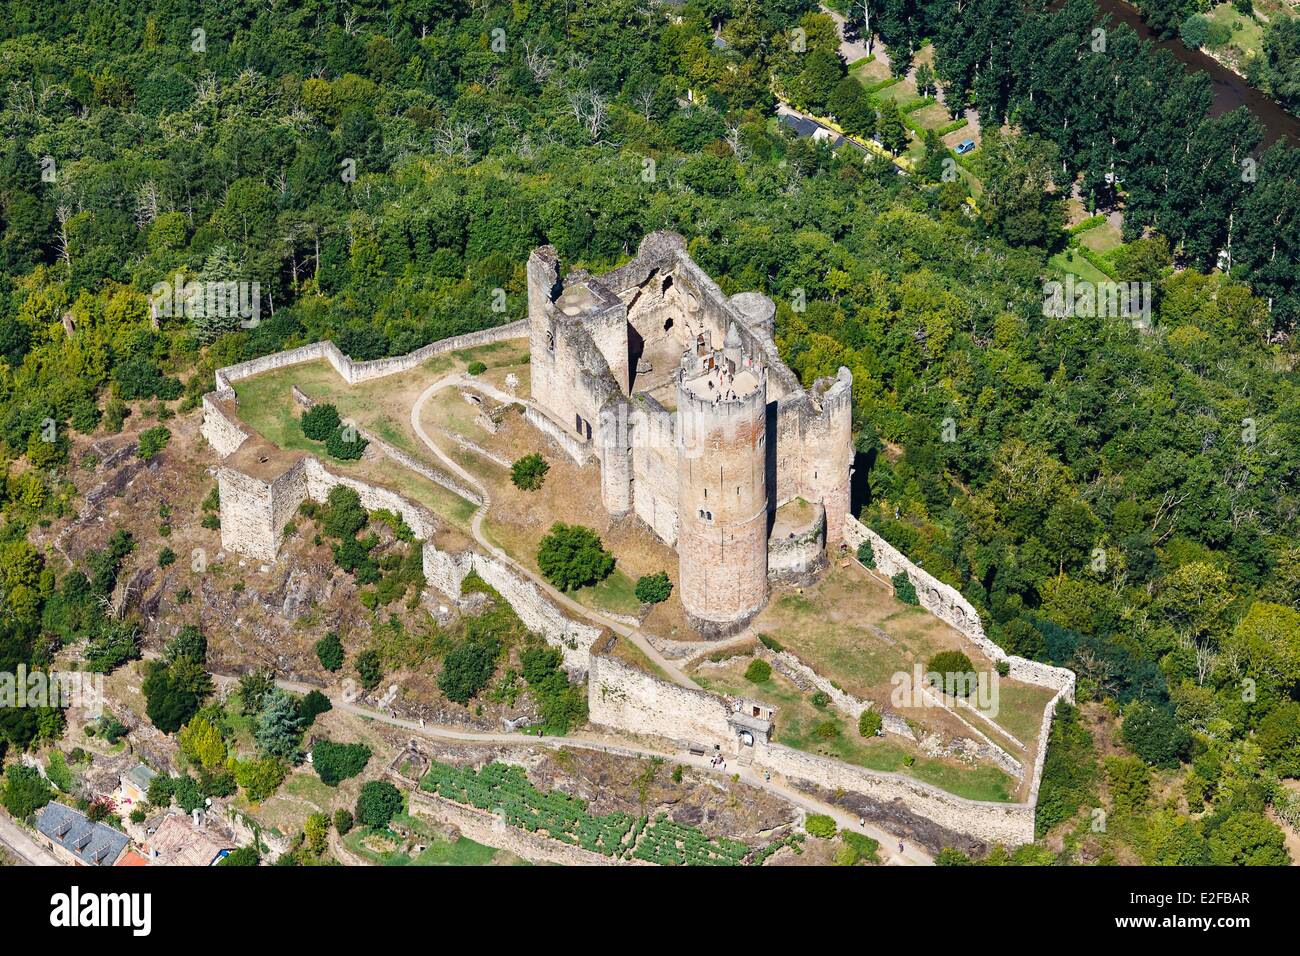 France Aveyron Najac labelled Les Plus Beaux Villages de France (The Most Beautiful Villages of France) the castle (aerial view) Stock Photo